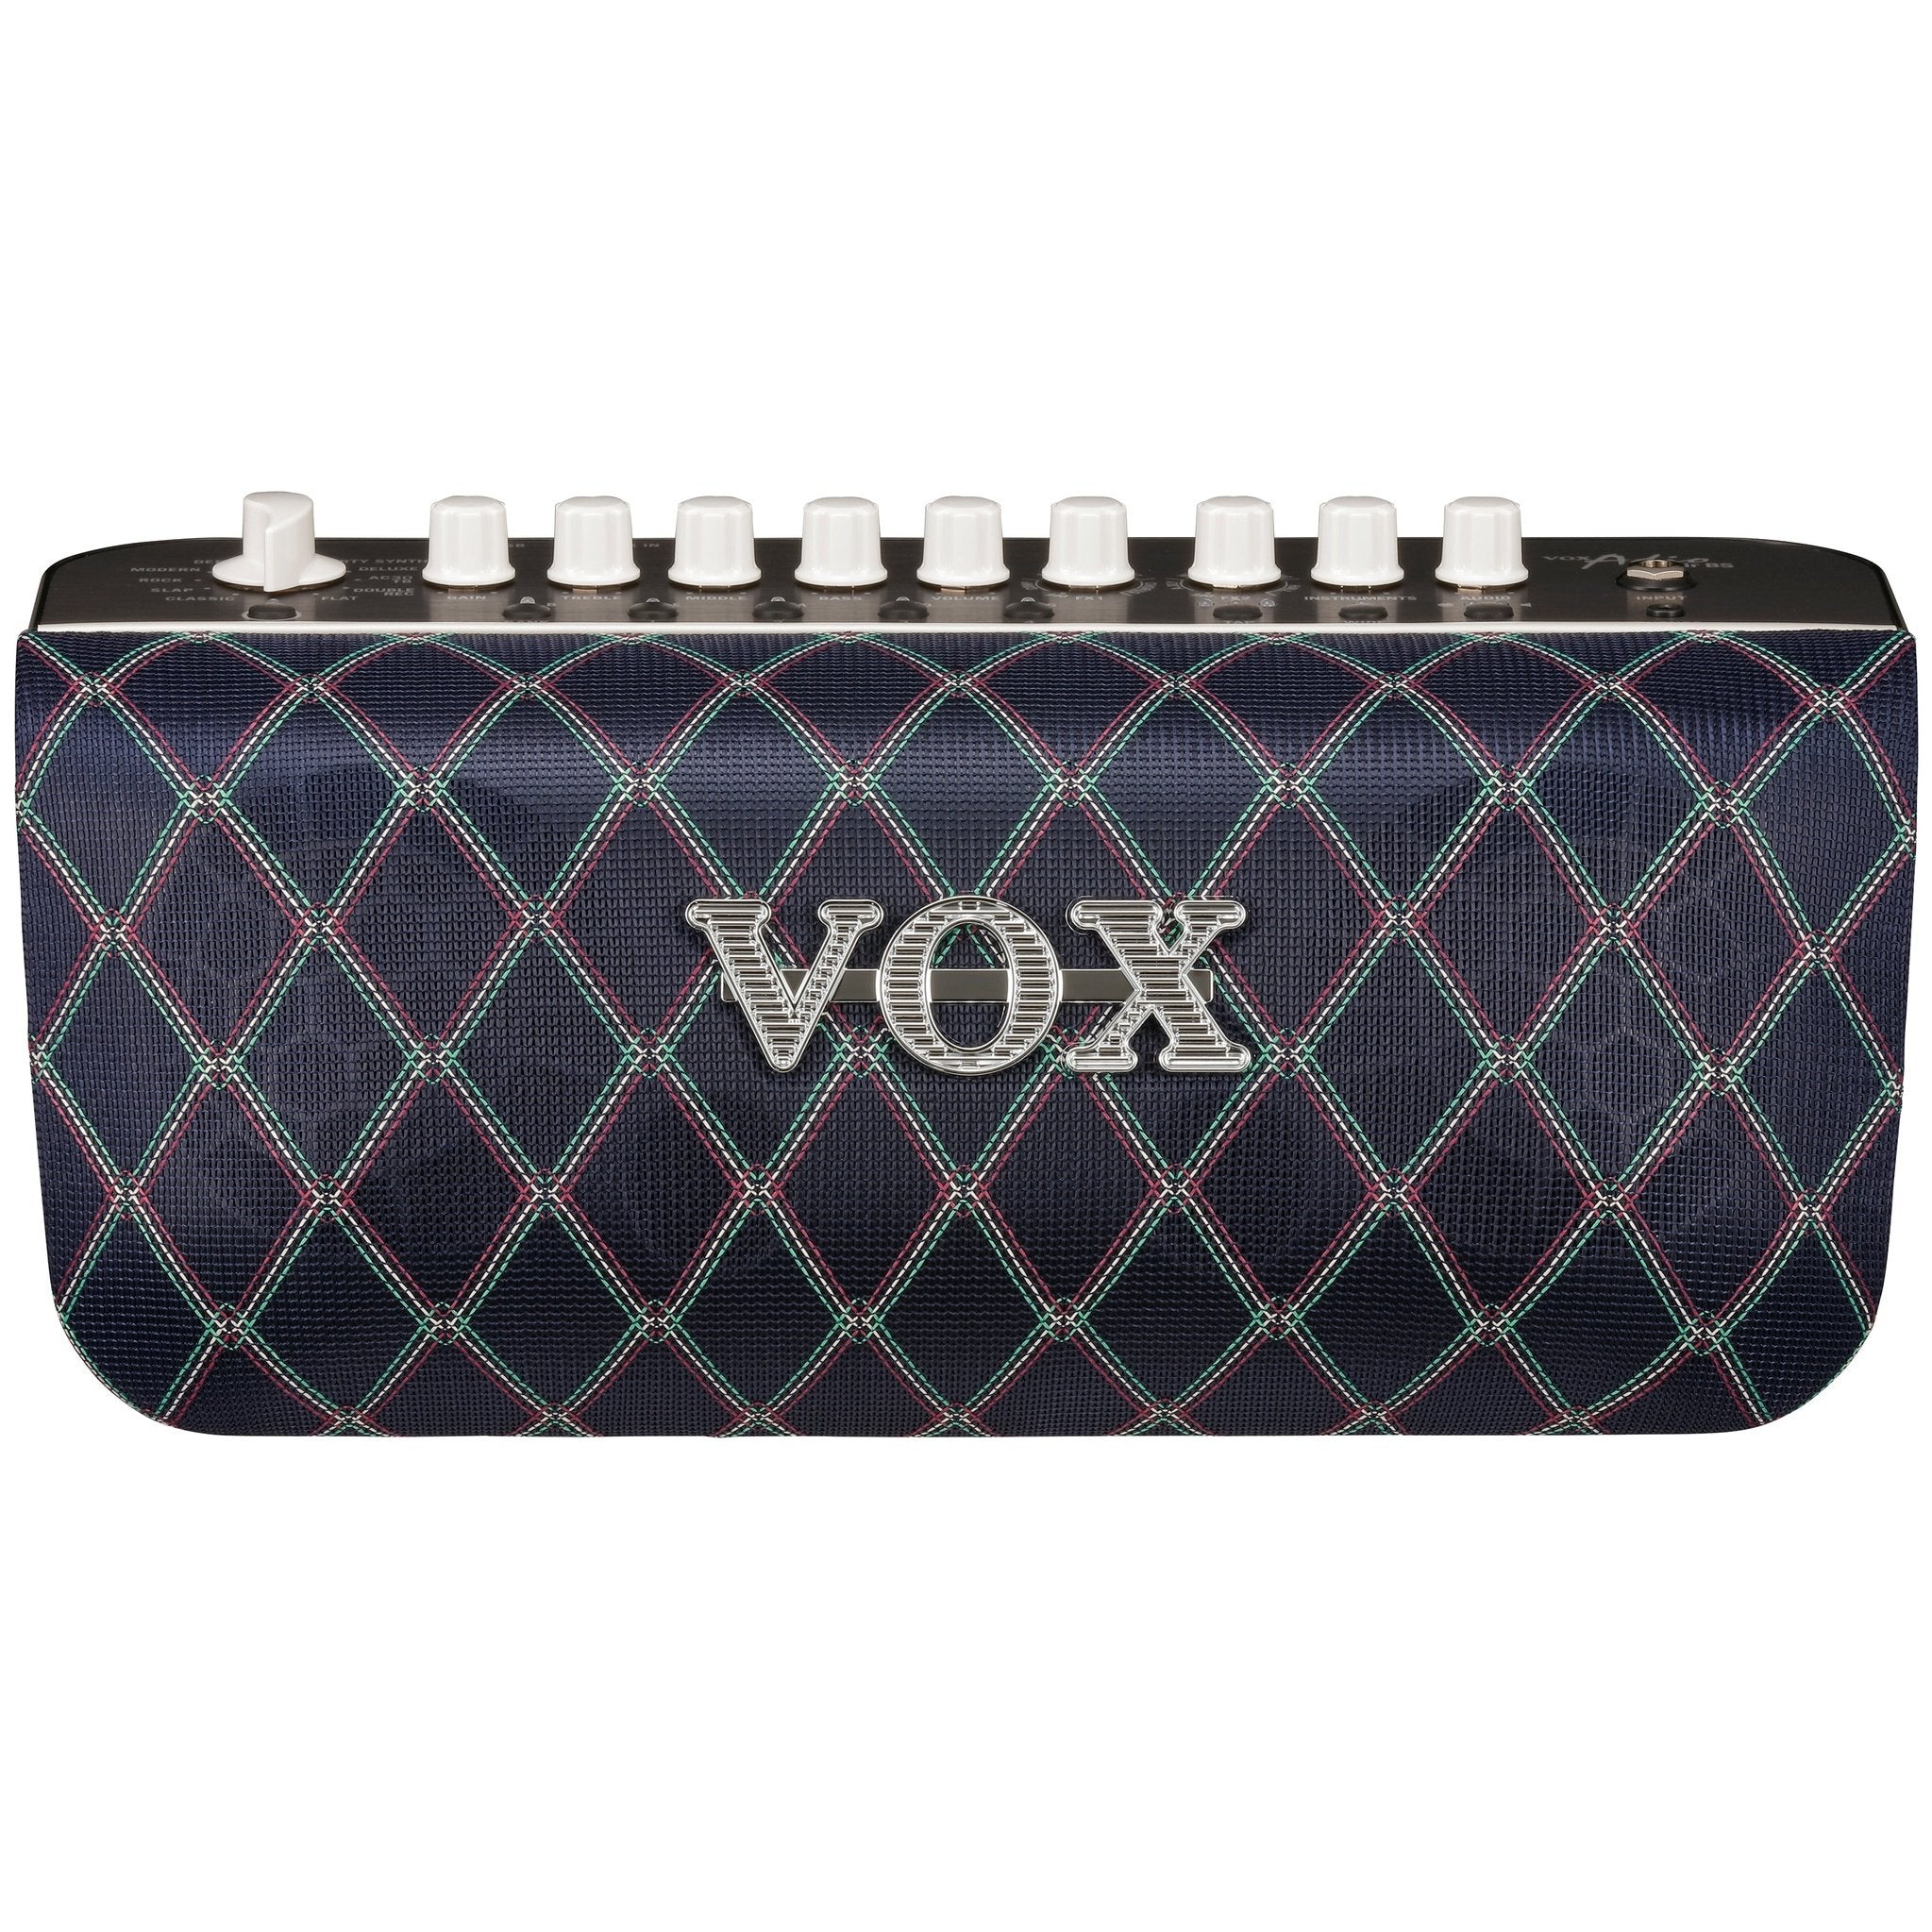 Vox Adio Air Bass Guitar Amp w/Bluetooth